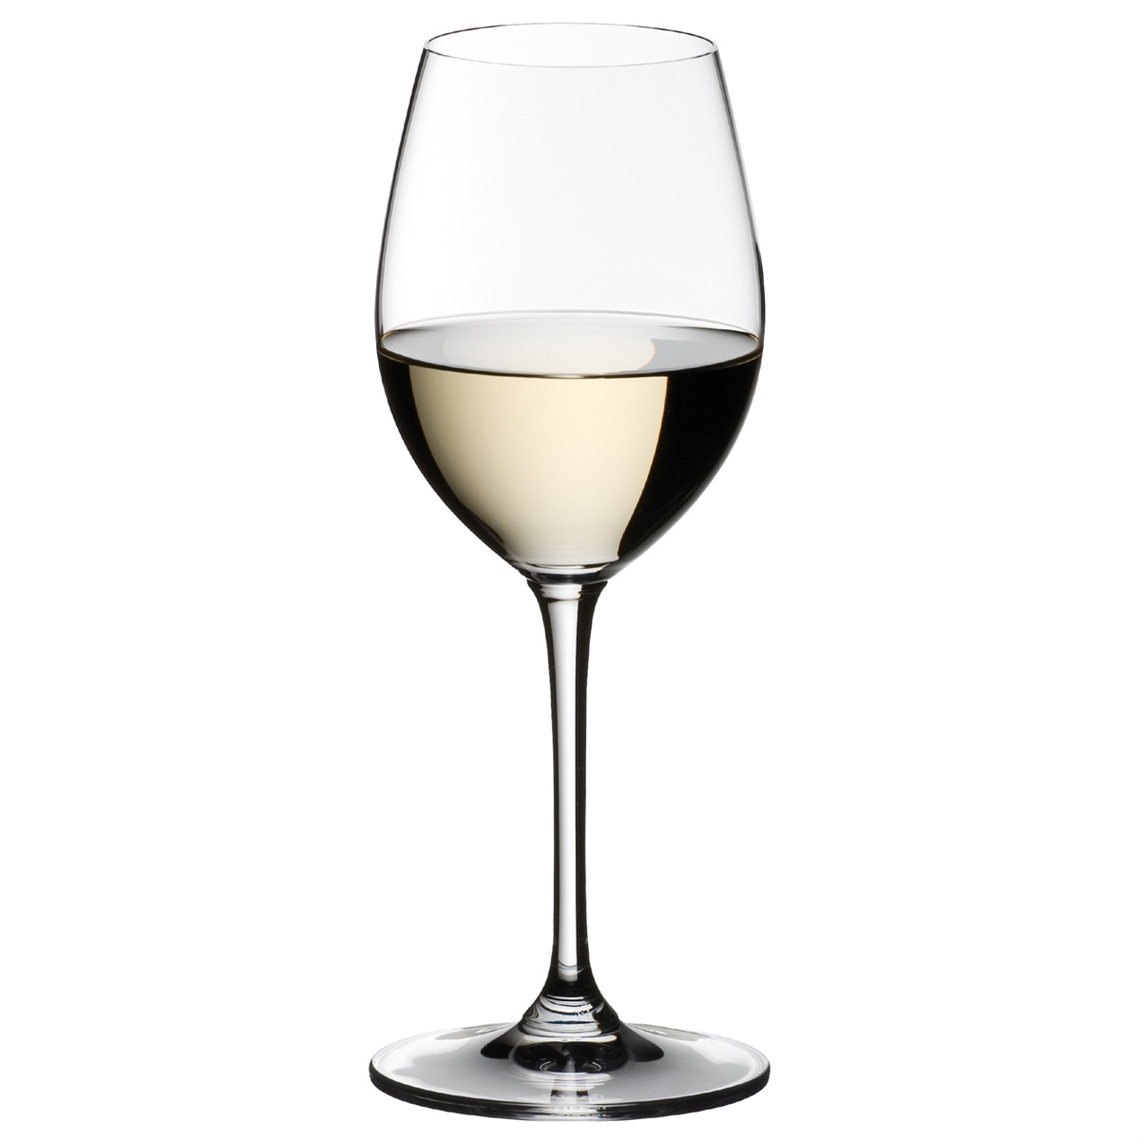 View more grassl glass from our Dessert Wine Glasses range